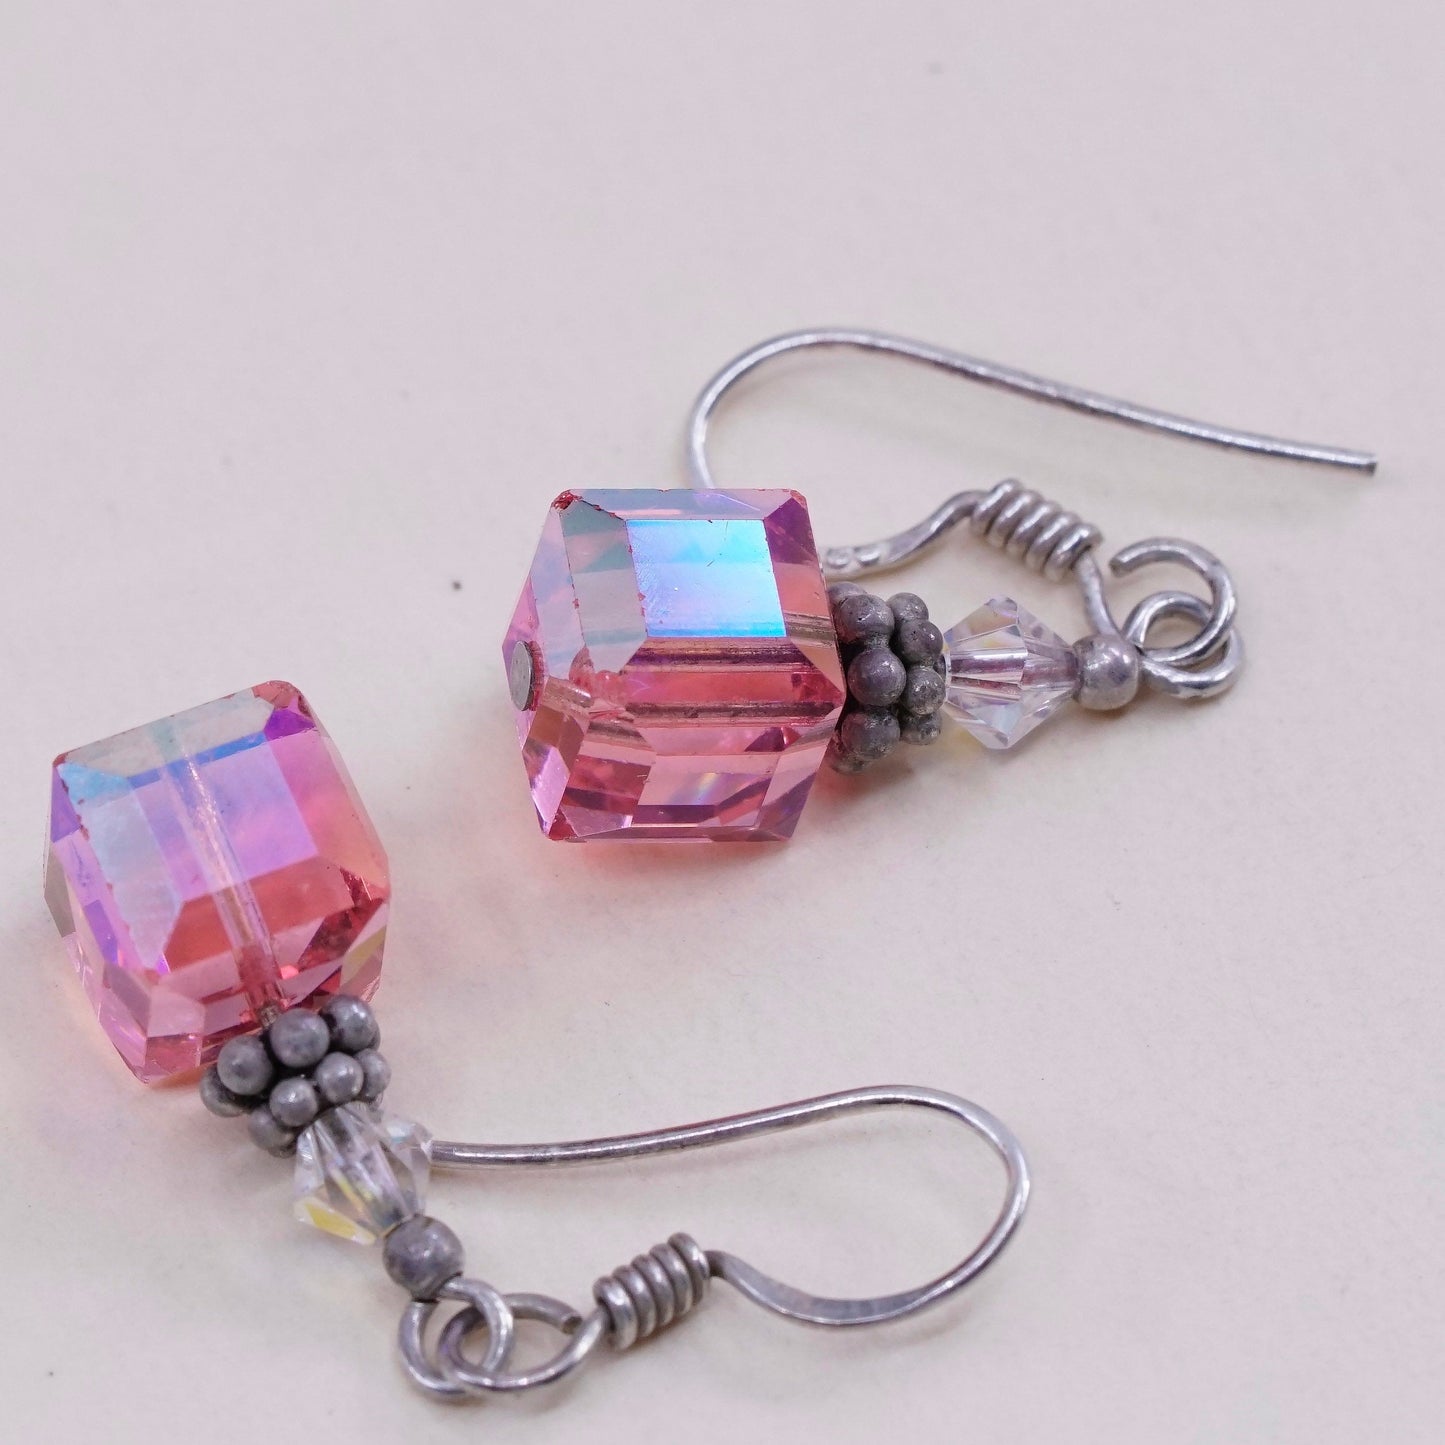 Vintage Sterling 925 silver handmade earrings, with pink crystal cube